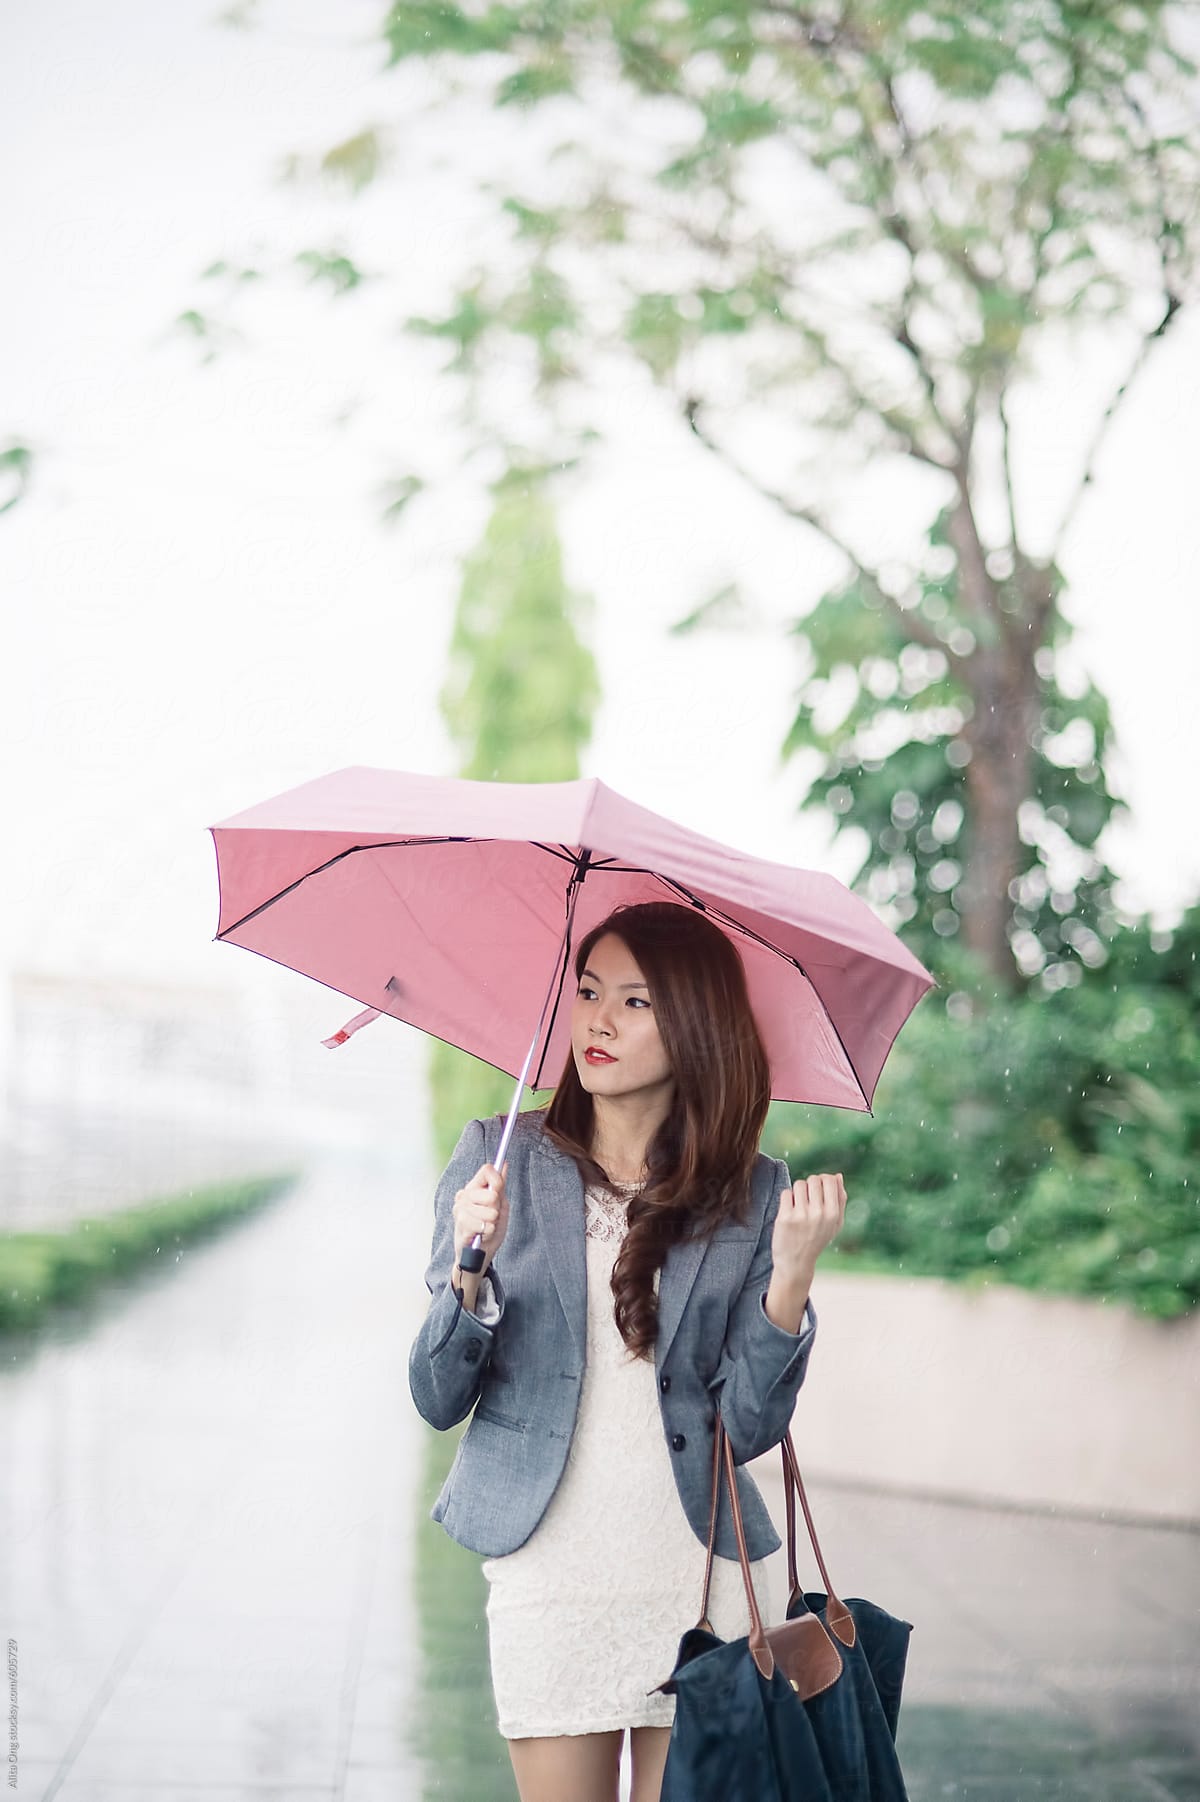 Beautiful woman holding umbrella in rainy day